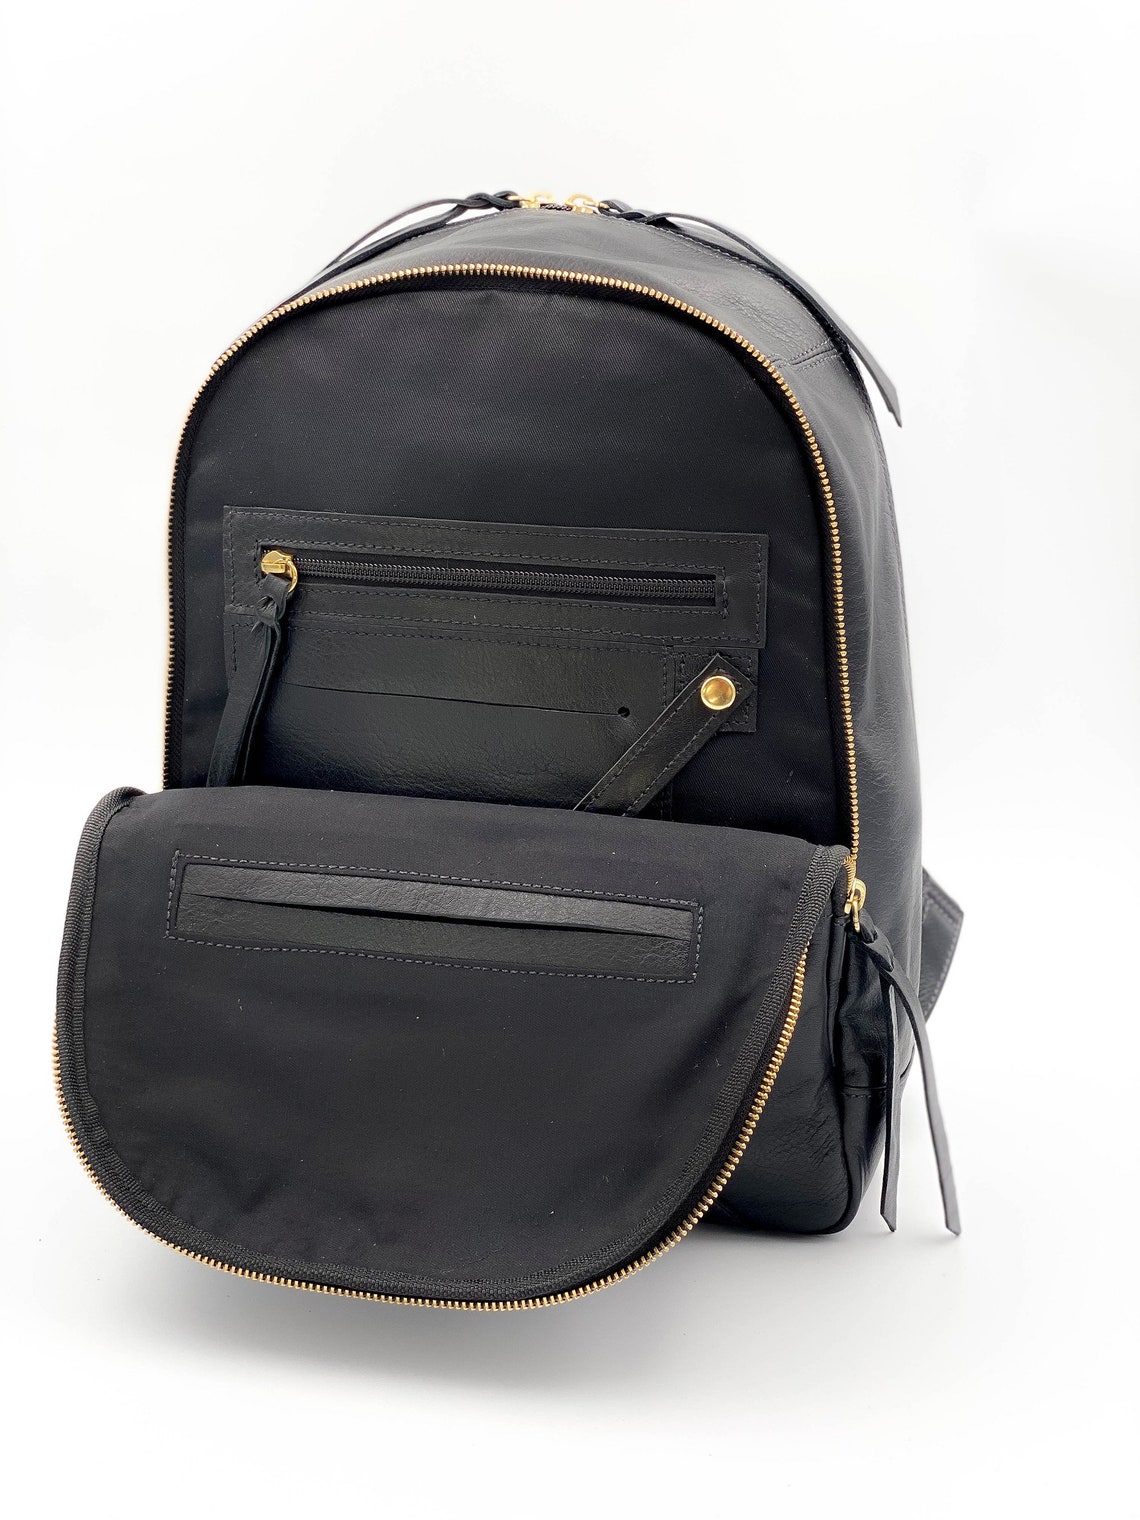 Black leather backpack woman Laptop leather messenger bag | Etsy